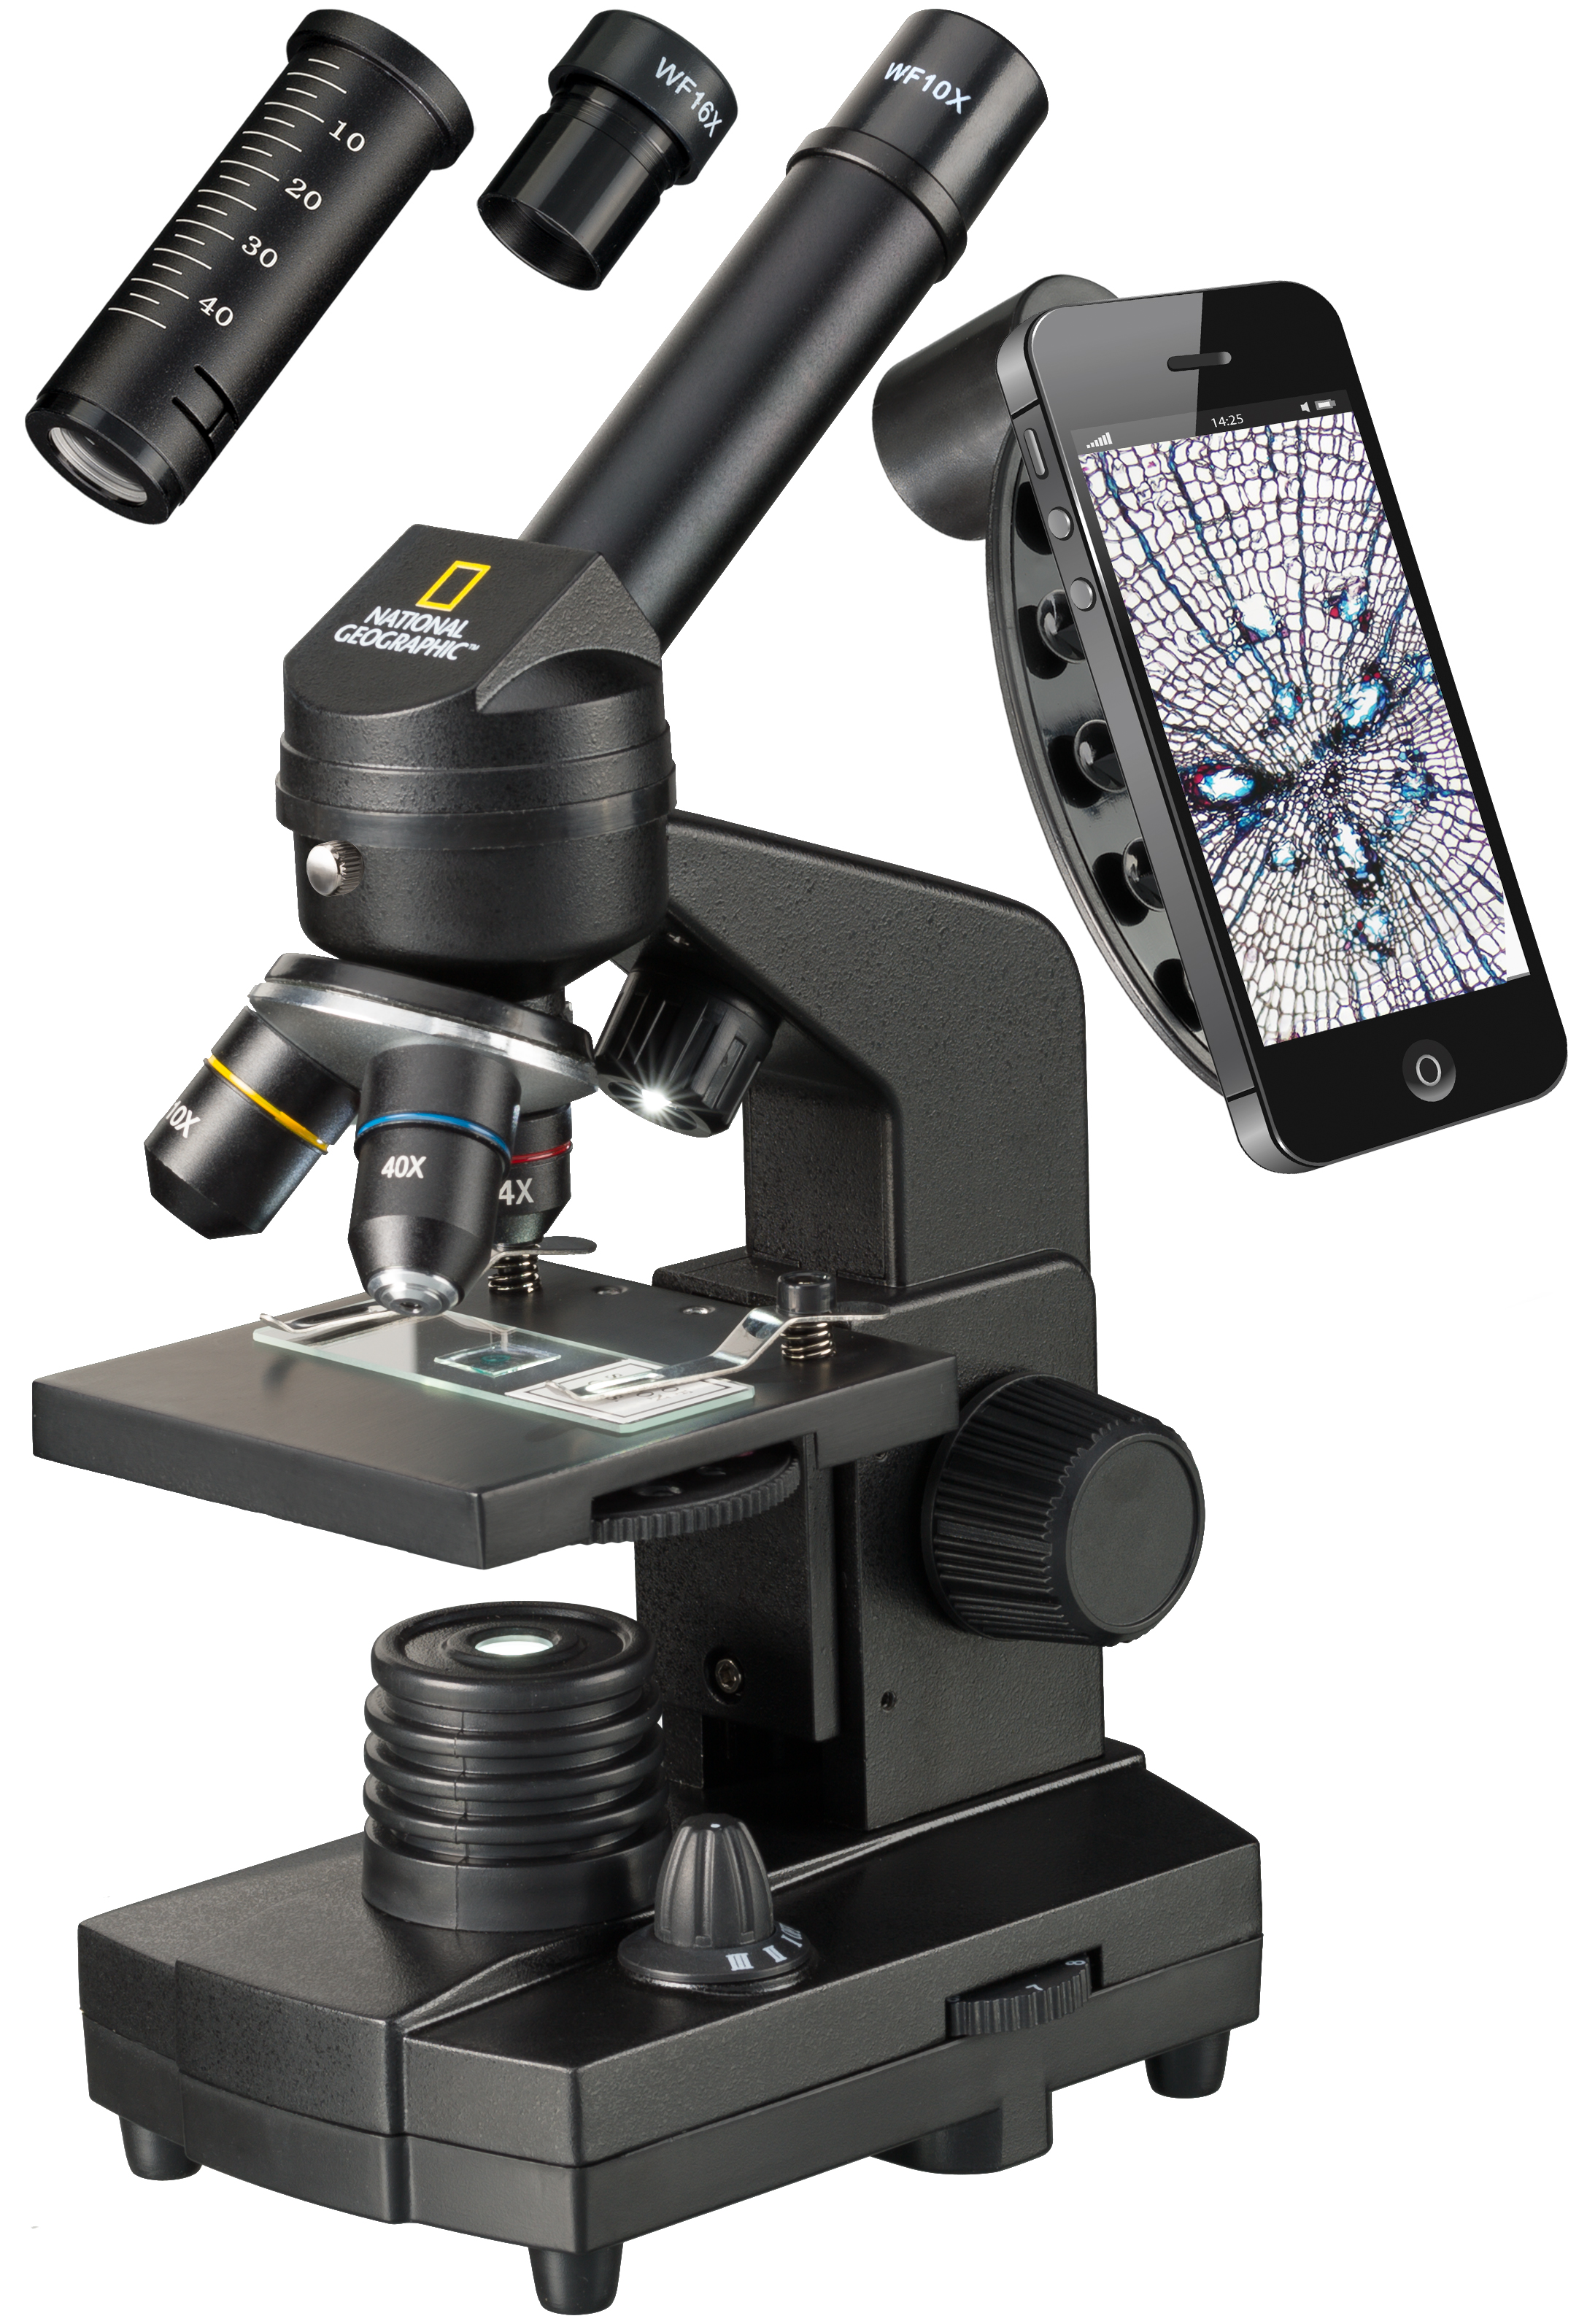 Microscopio NATIONAL GEOGRAPHIC 40x-1280x con Soporte para Smartphone